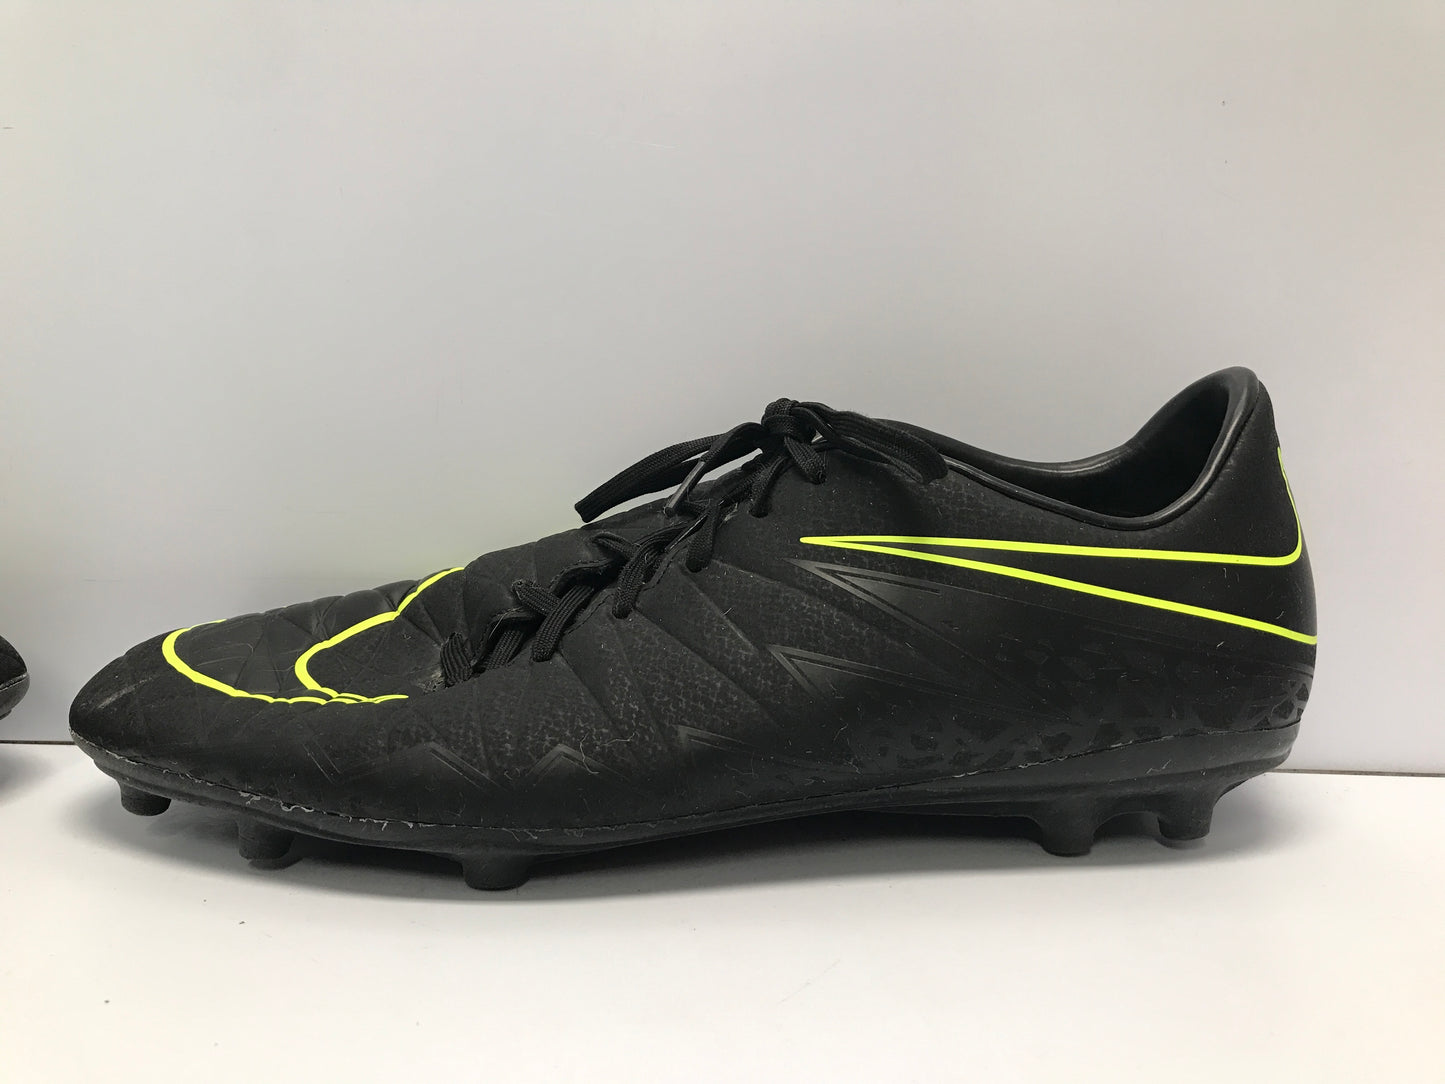 Soccer Shoes Cleats Men's Size 13 Nike Black Lime Excellent